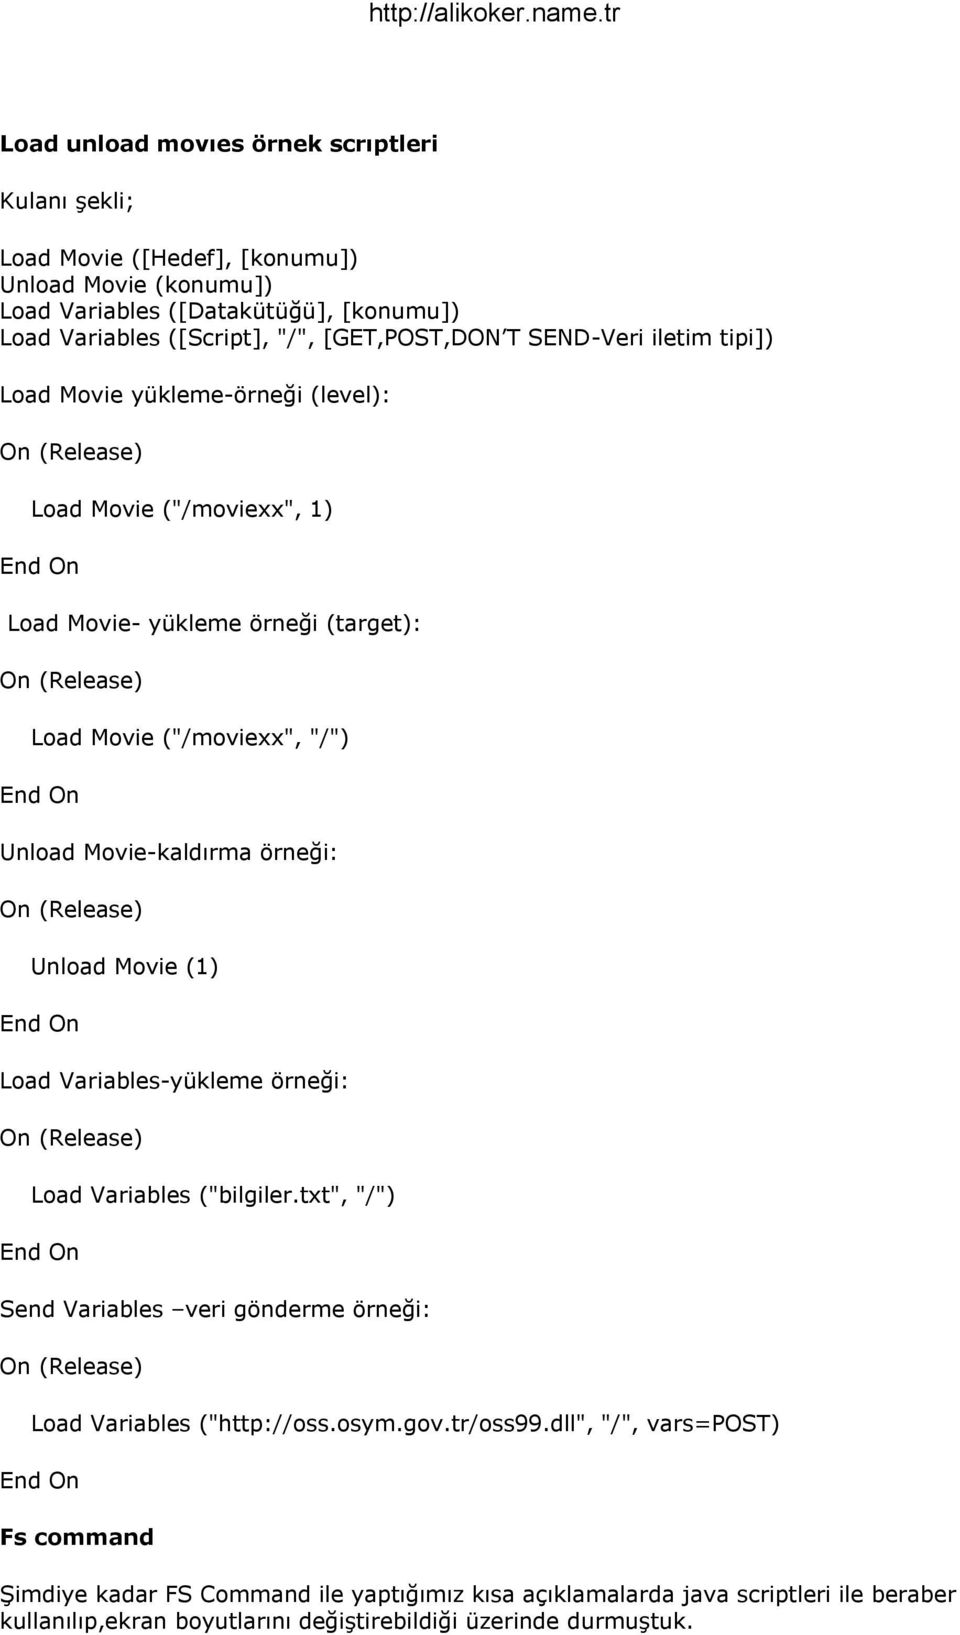 Movie-kaldırma örneği: Unload Movie (1) Load Variables-yükleme örneği: Load Variables ("bilgiler.txt", "/") Send Variables veri gönderme örneği: Load Variables ("http://oss.osym.gov.